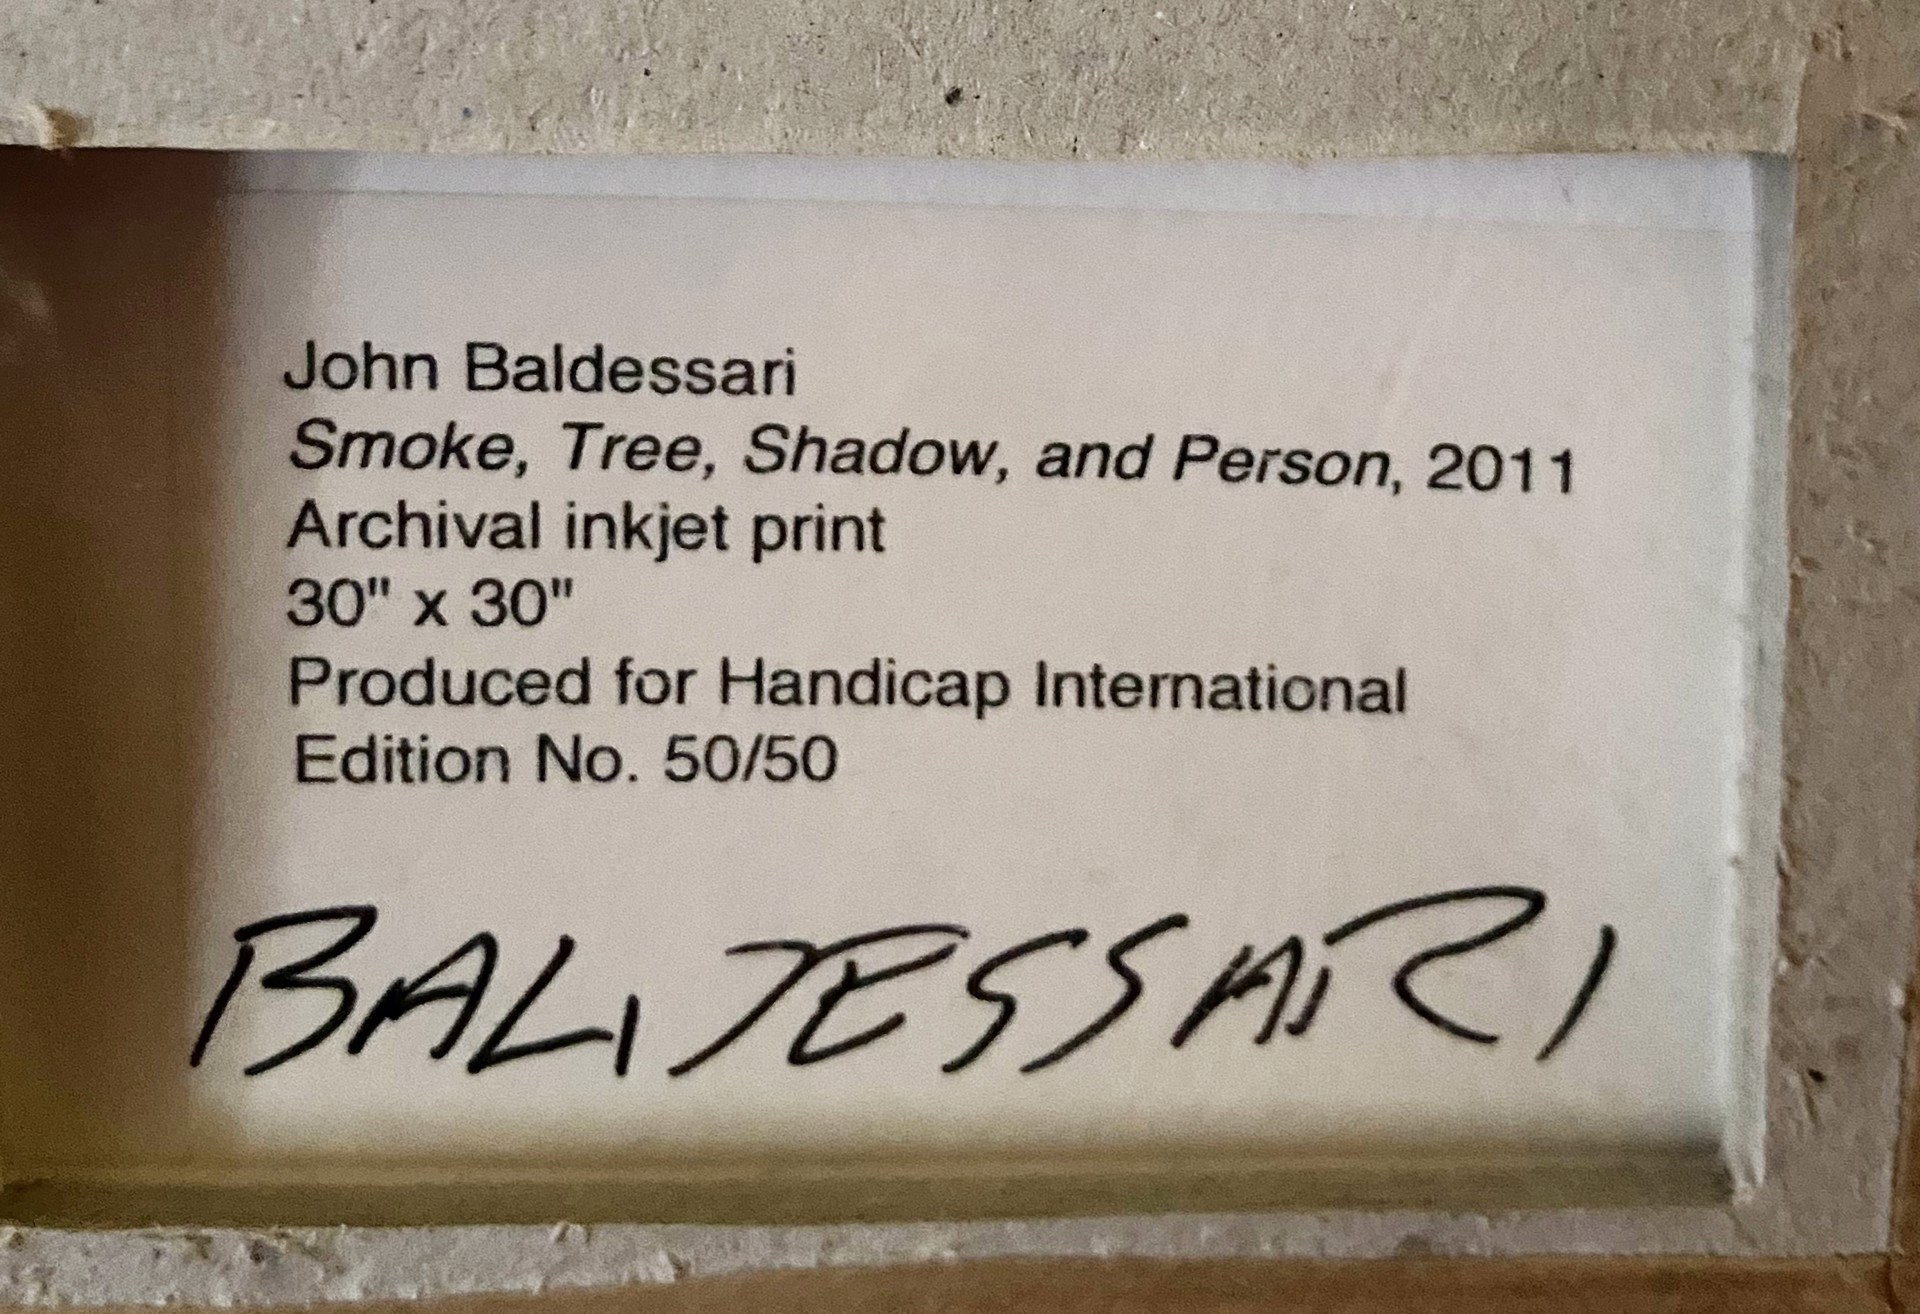 Smoke, Tree, Shadow and Person by John Baldessari